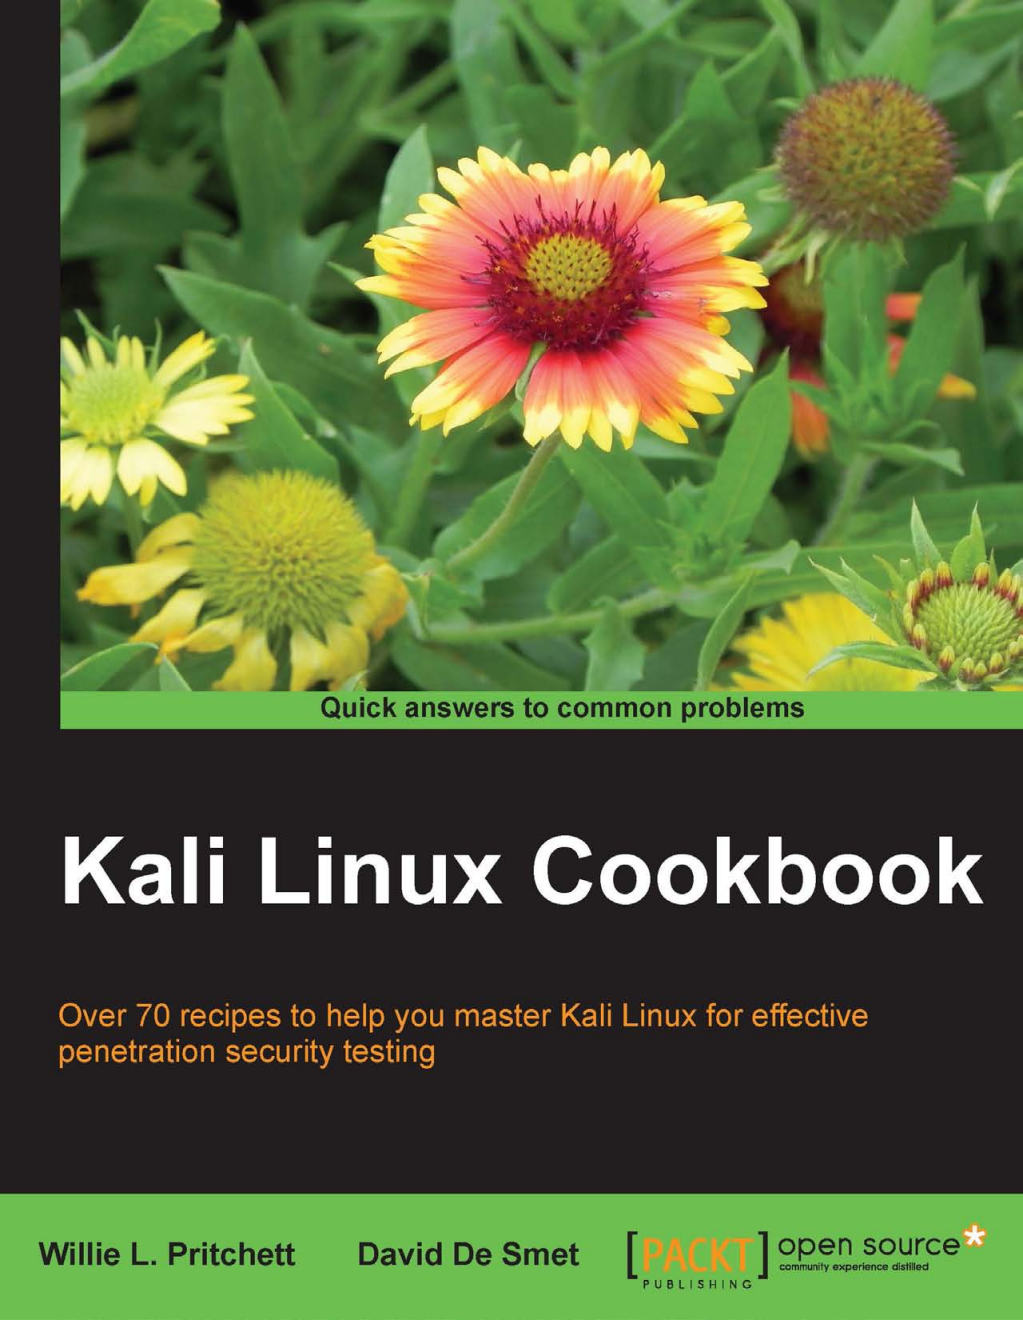 docs/kali-linux-cookbook-zh/cover.jpg